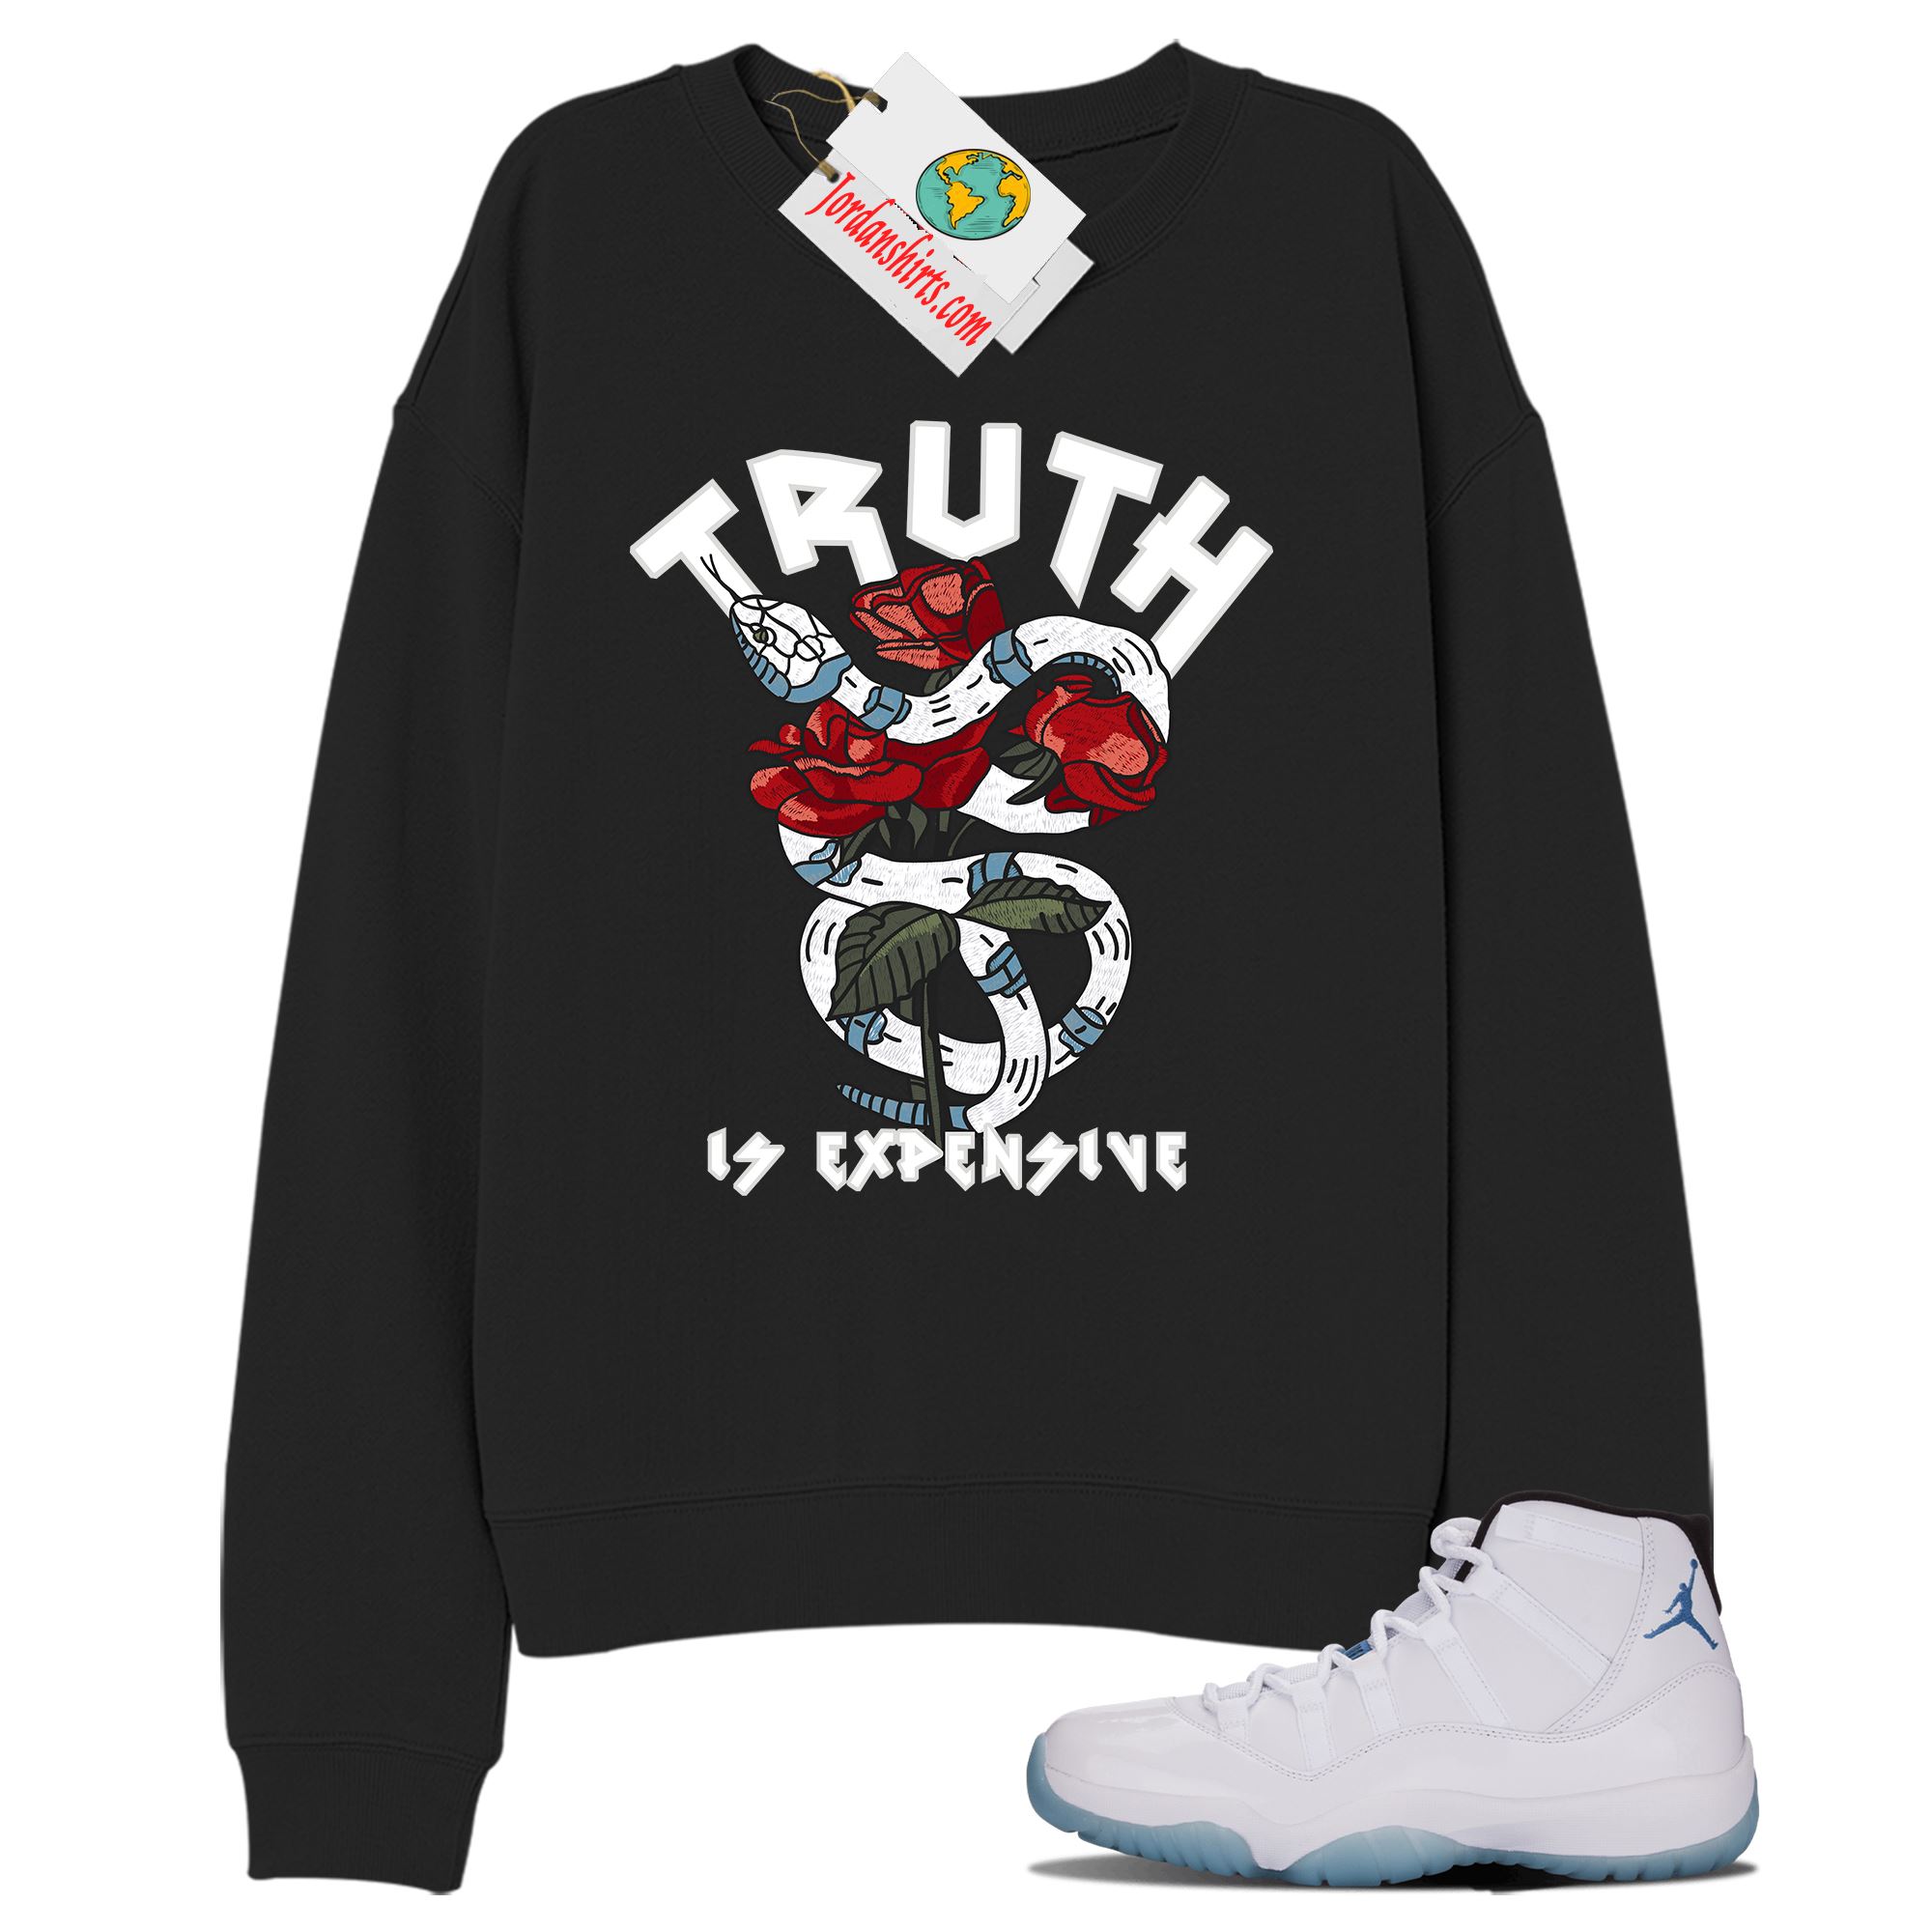 Jordan 11 Sweatshirt, Truth Is Expensive Snake Black Sweatshirt Air Jordan 11 Legend Blue 11s Plus Size Up To 5xl